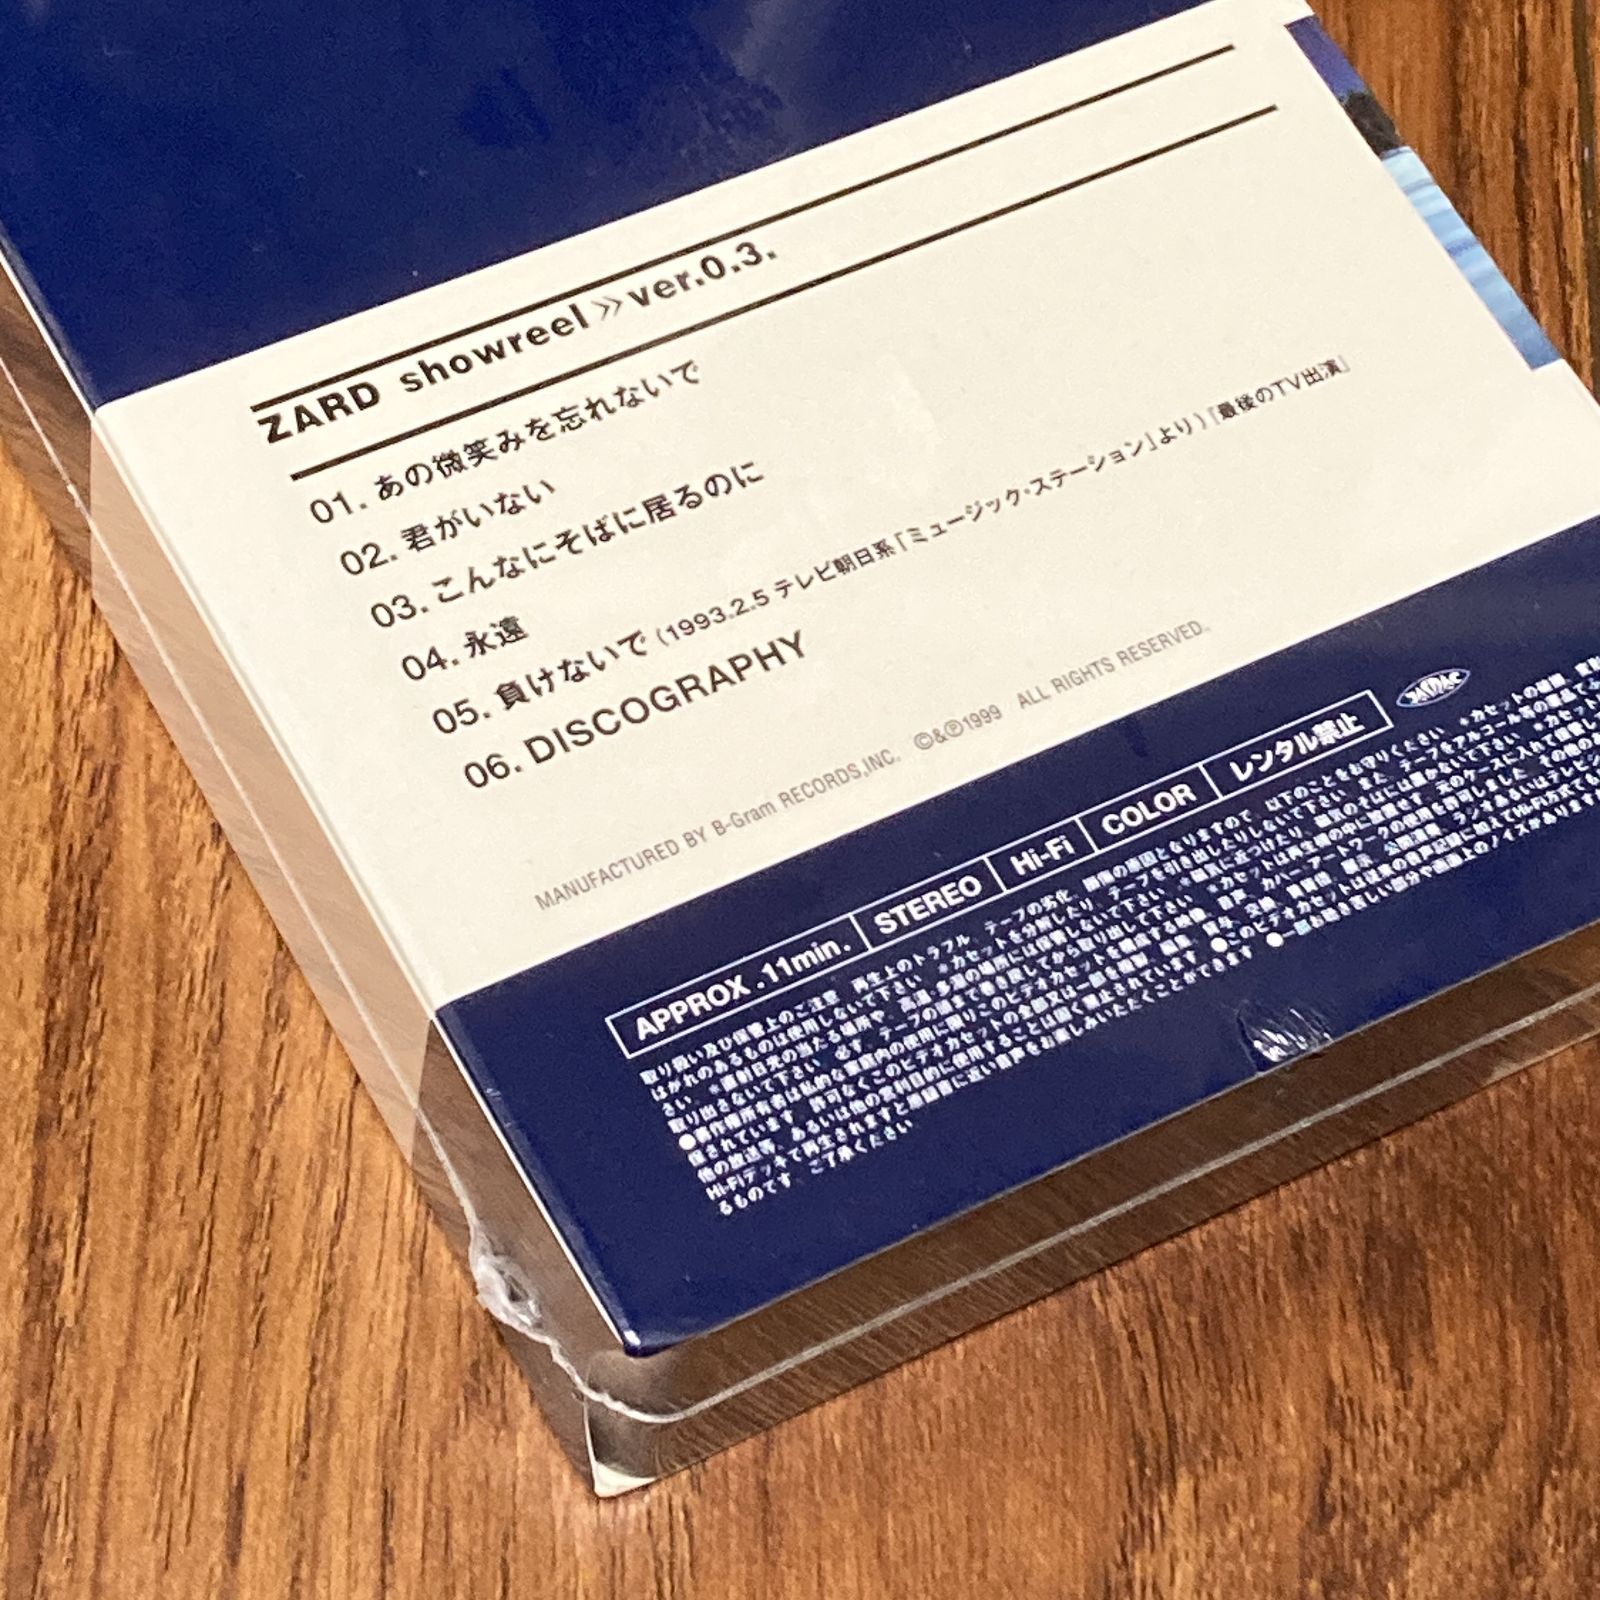 ZARD BEST The Single Collection未開封CD+VHS-